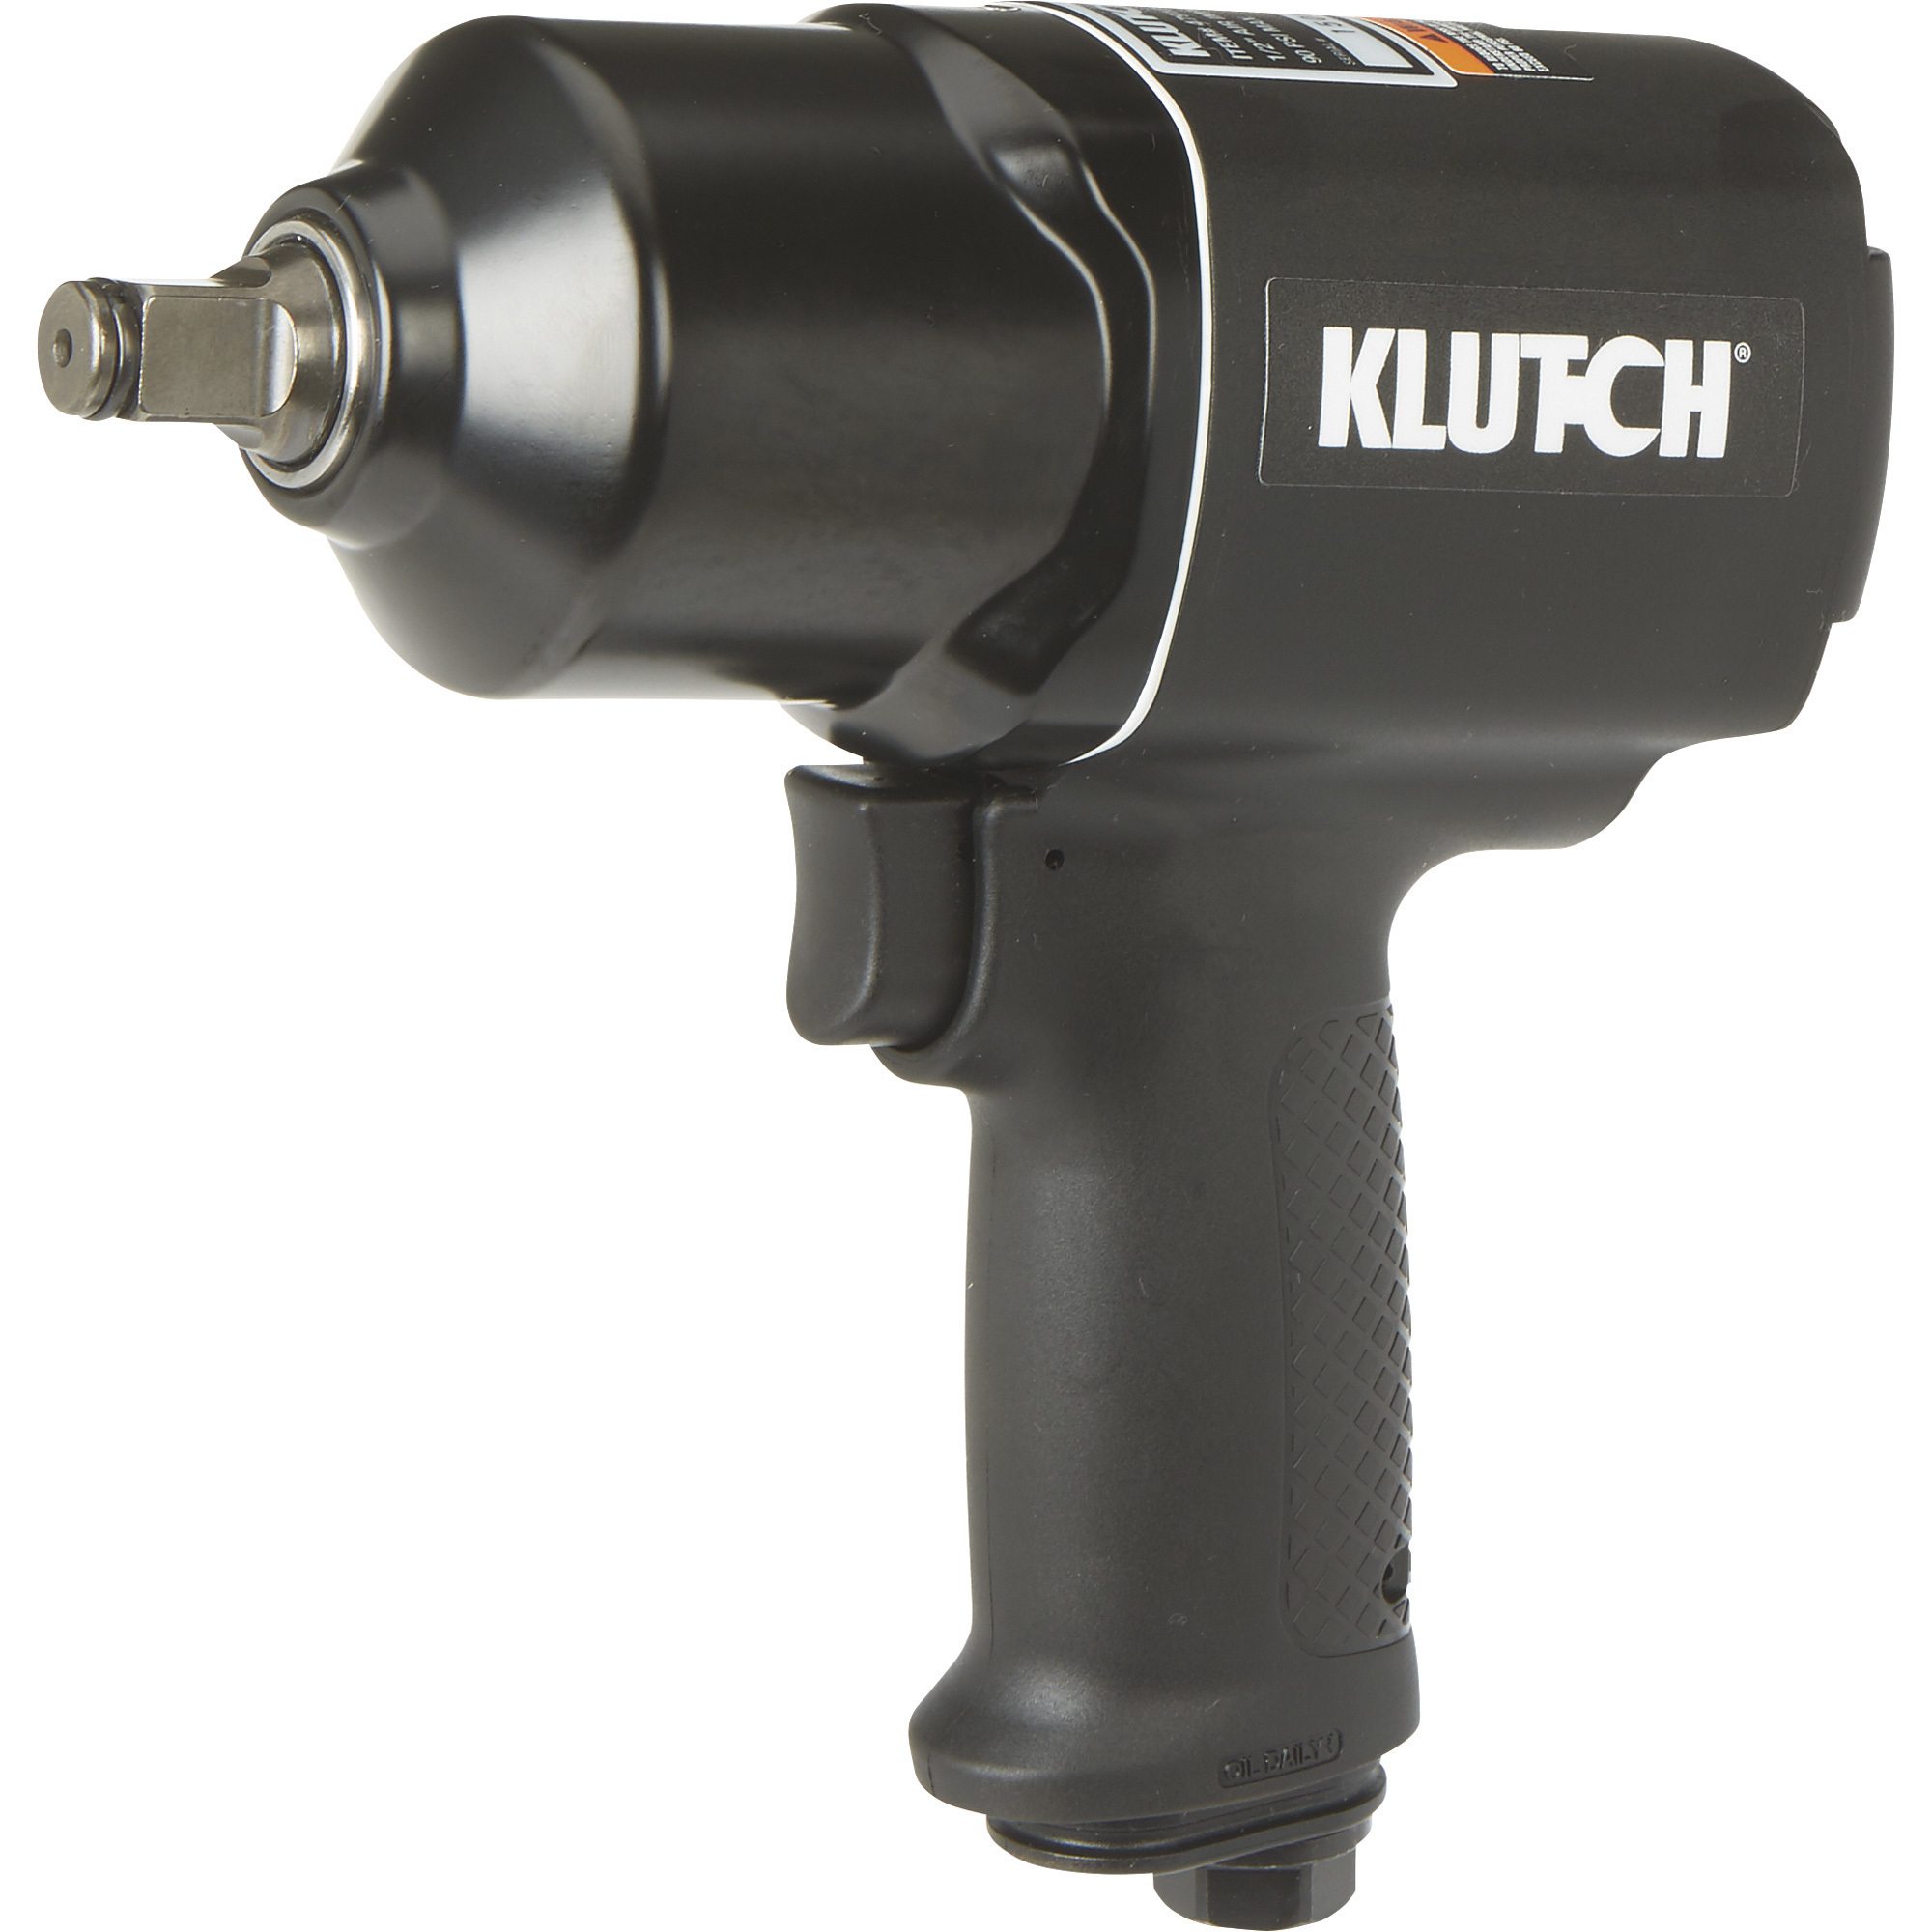 Klutch Air Impact Wrench, 1/2Inch Drive, 4 CFM, 980 Ft./Lbs. Torque